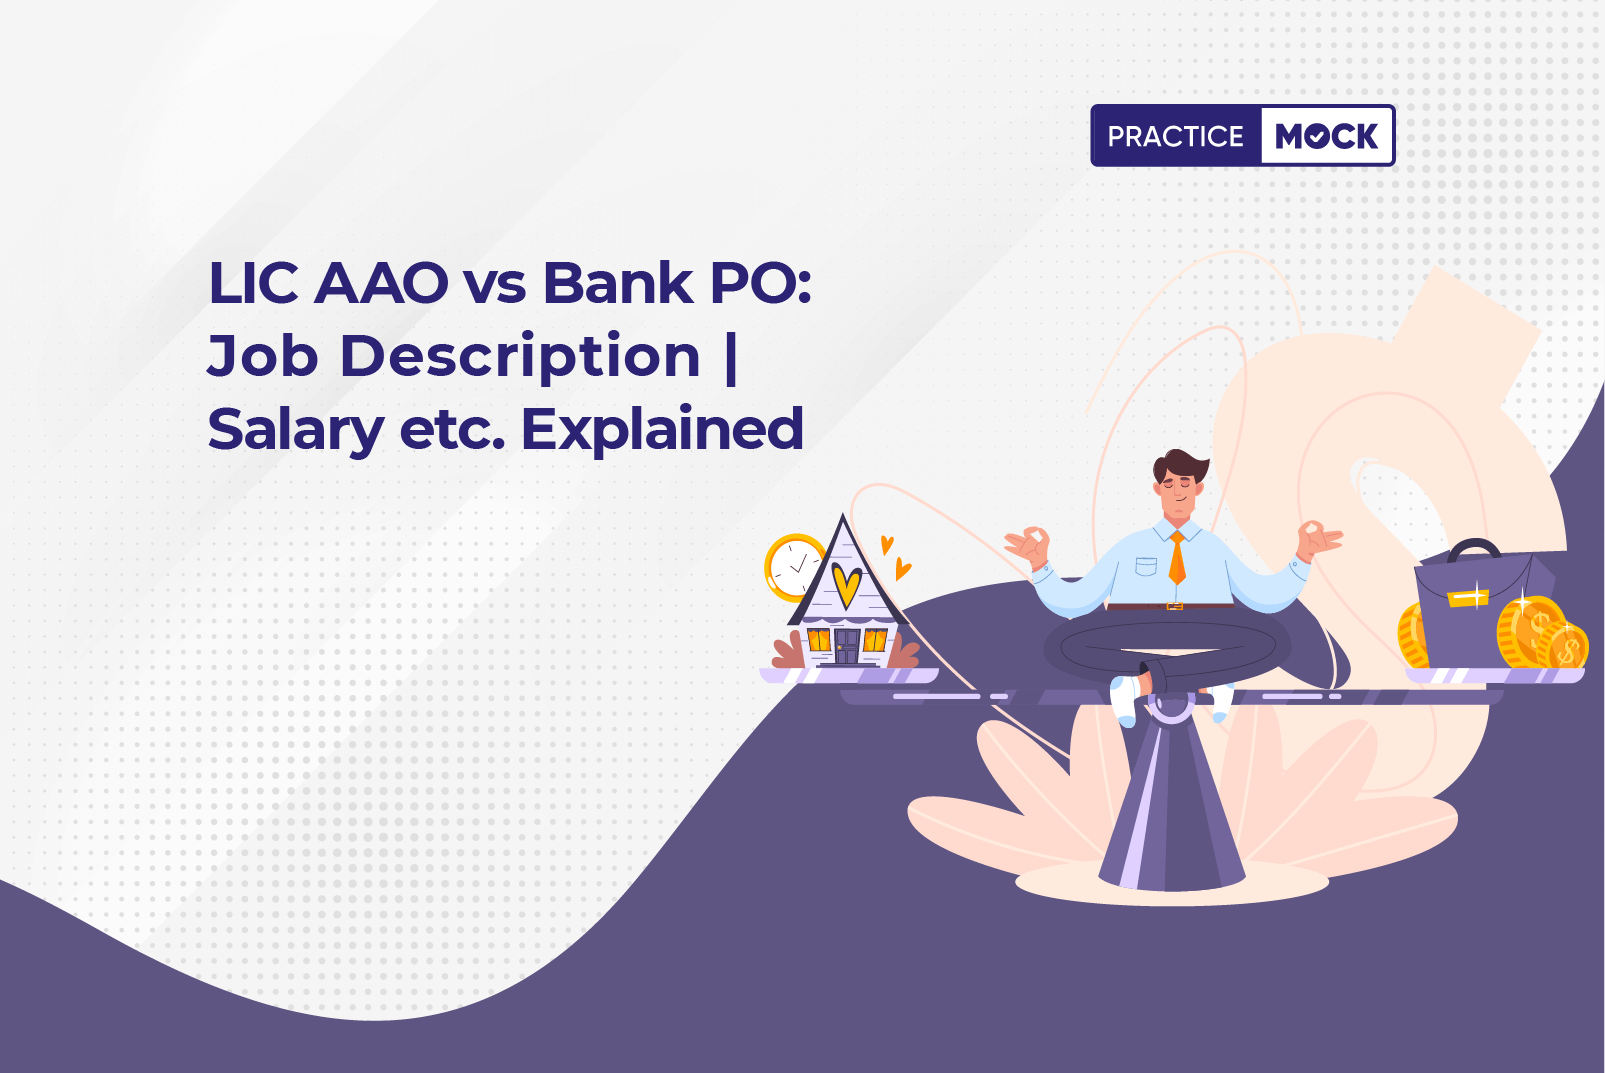 LIC AAO vs Bank PO Salary Job Description etc. Explained